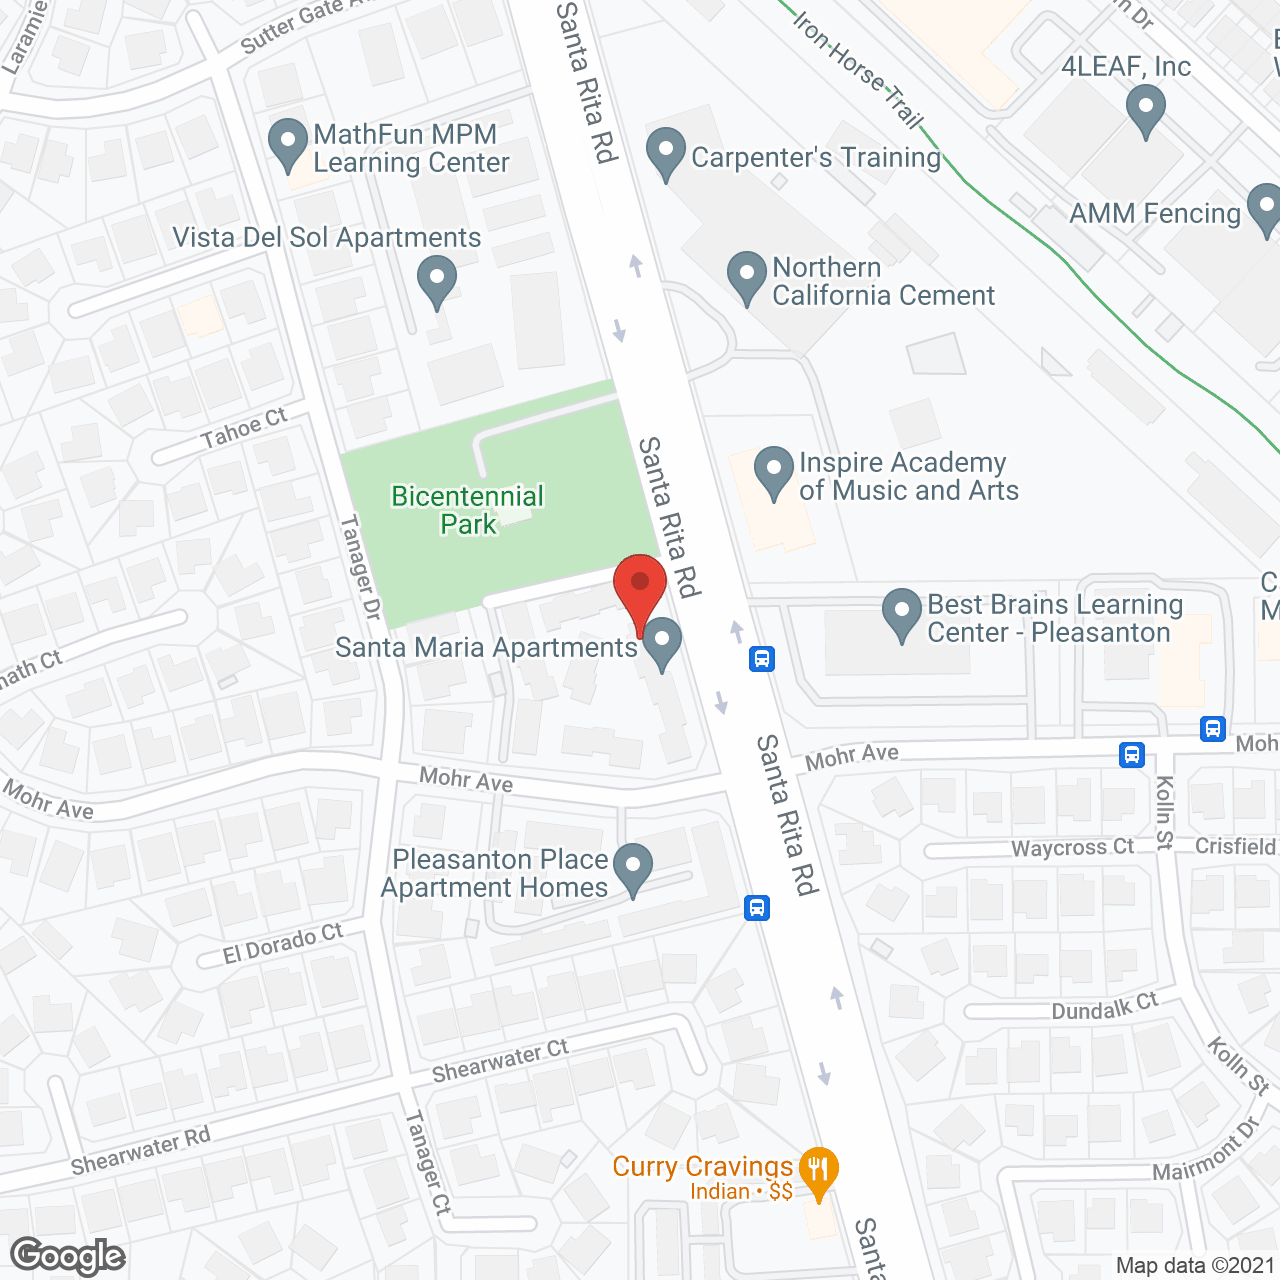 Santa Maria Apartments in google map